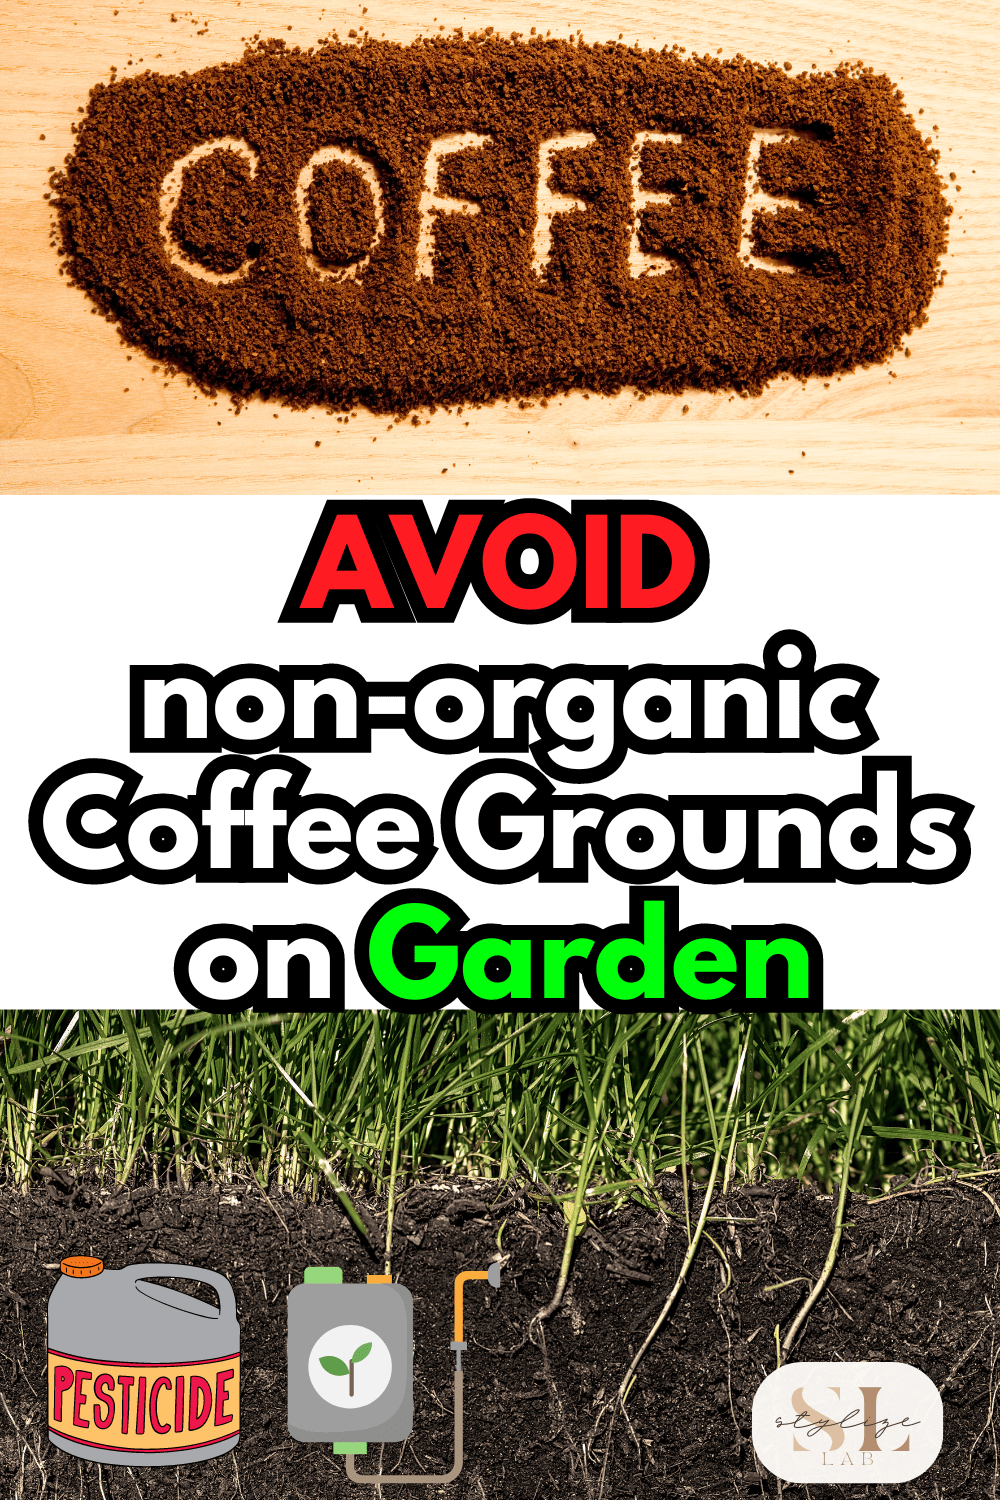 Avoid non-organic coffee grounds on garden